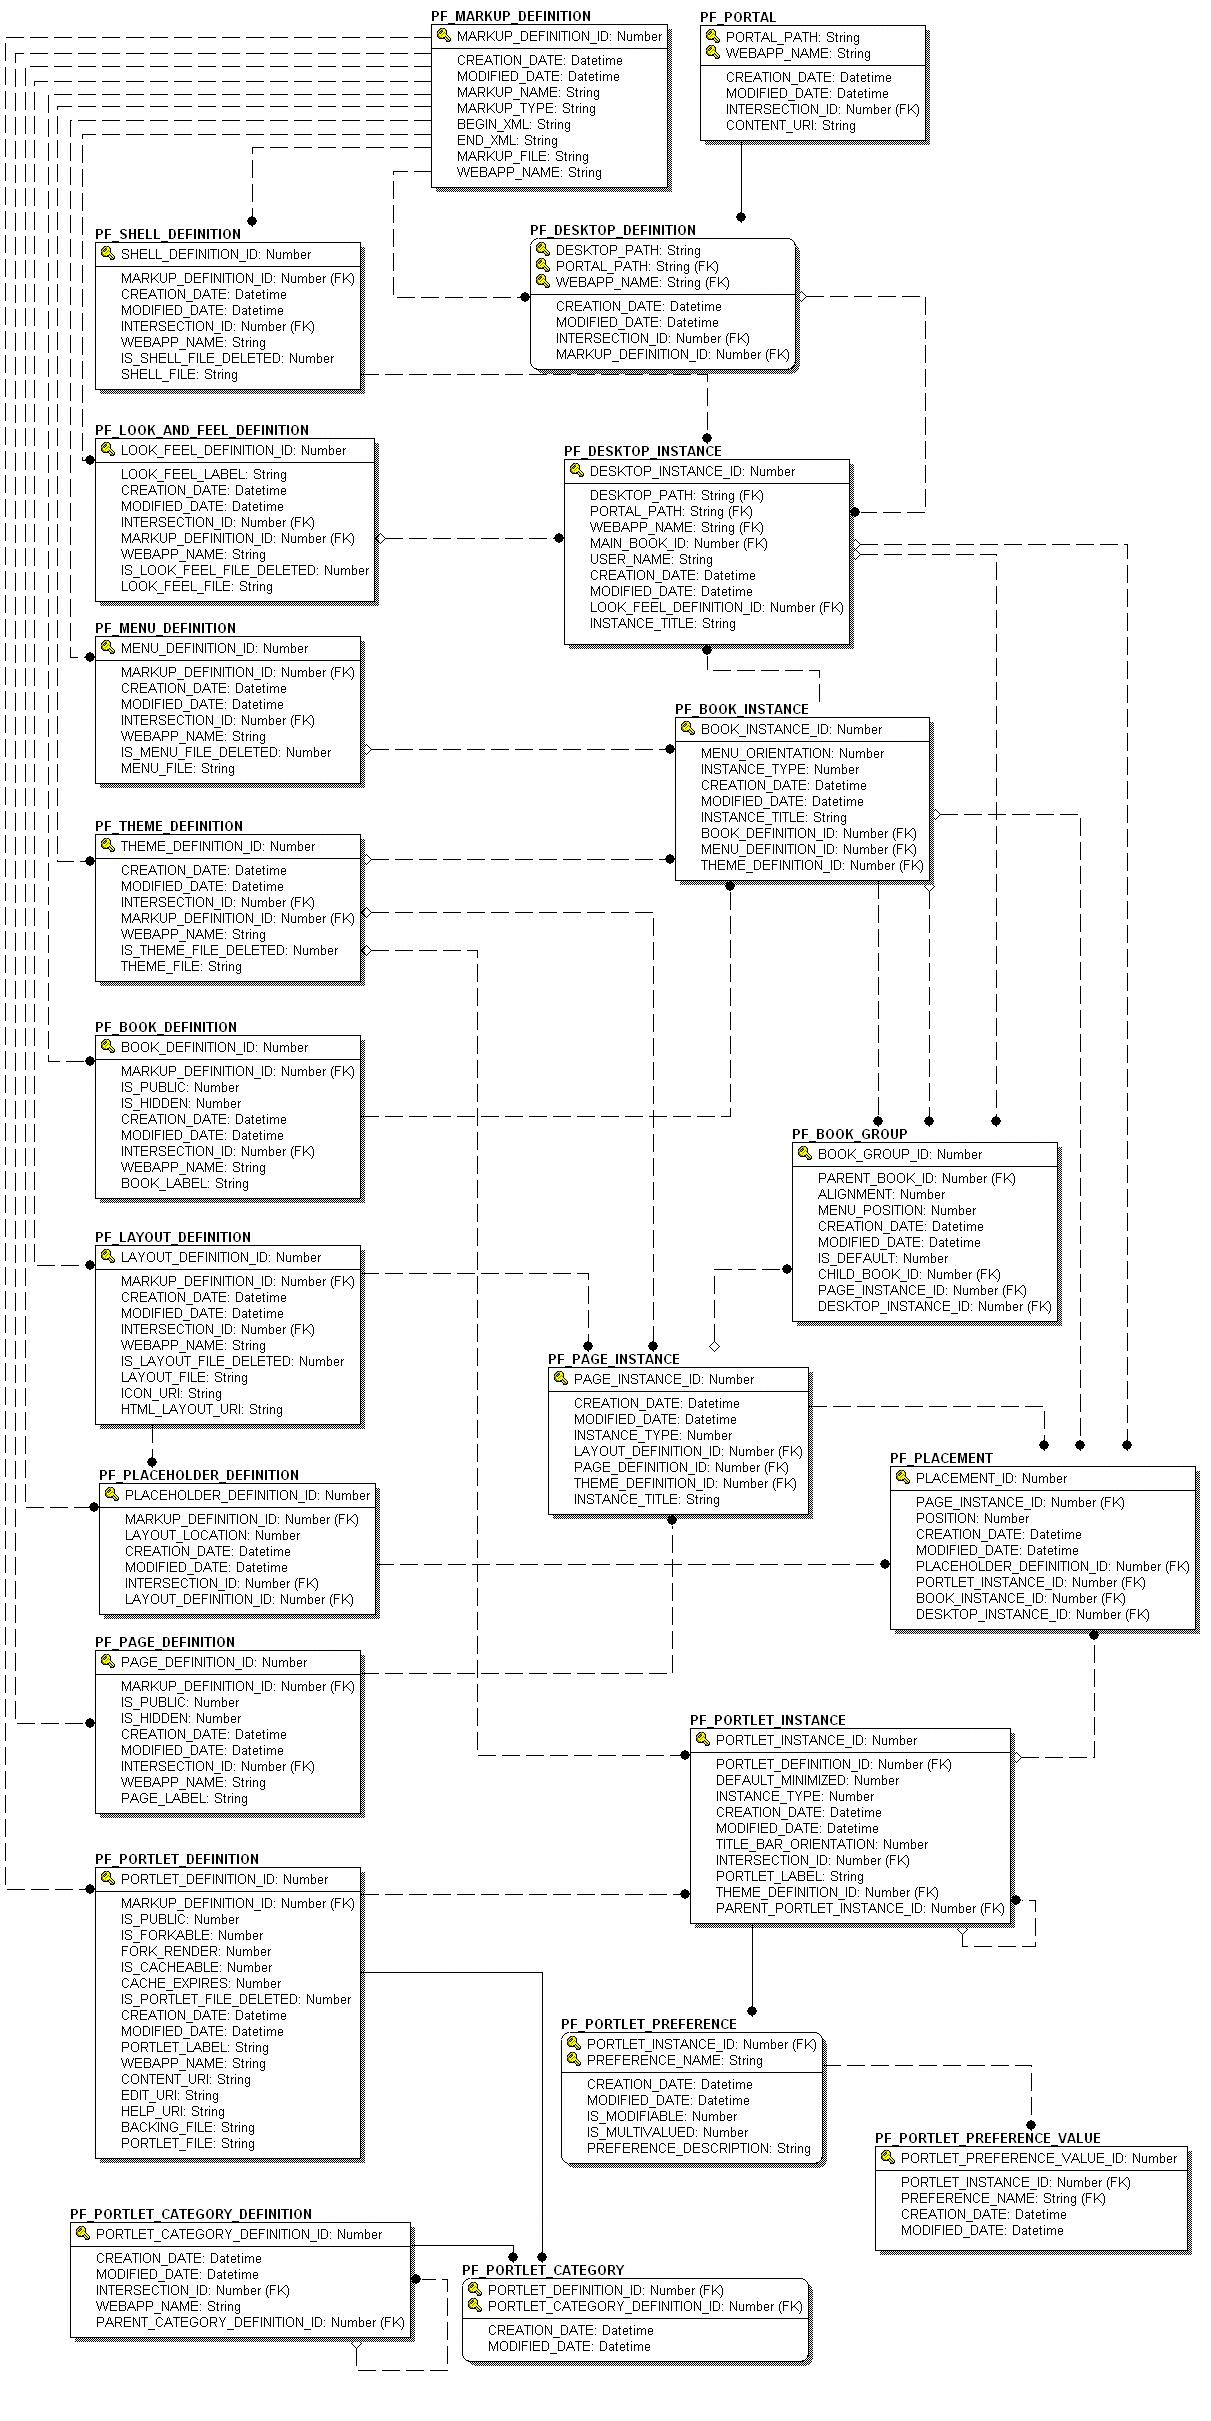 Entity-Relation Diagram for the Portal Framework Tables